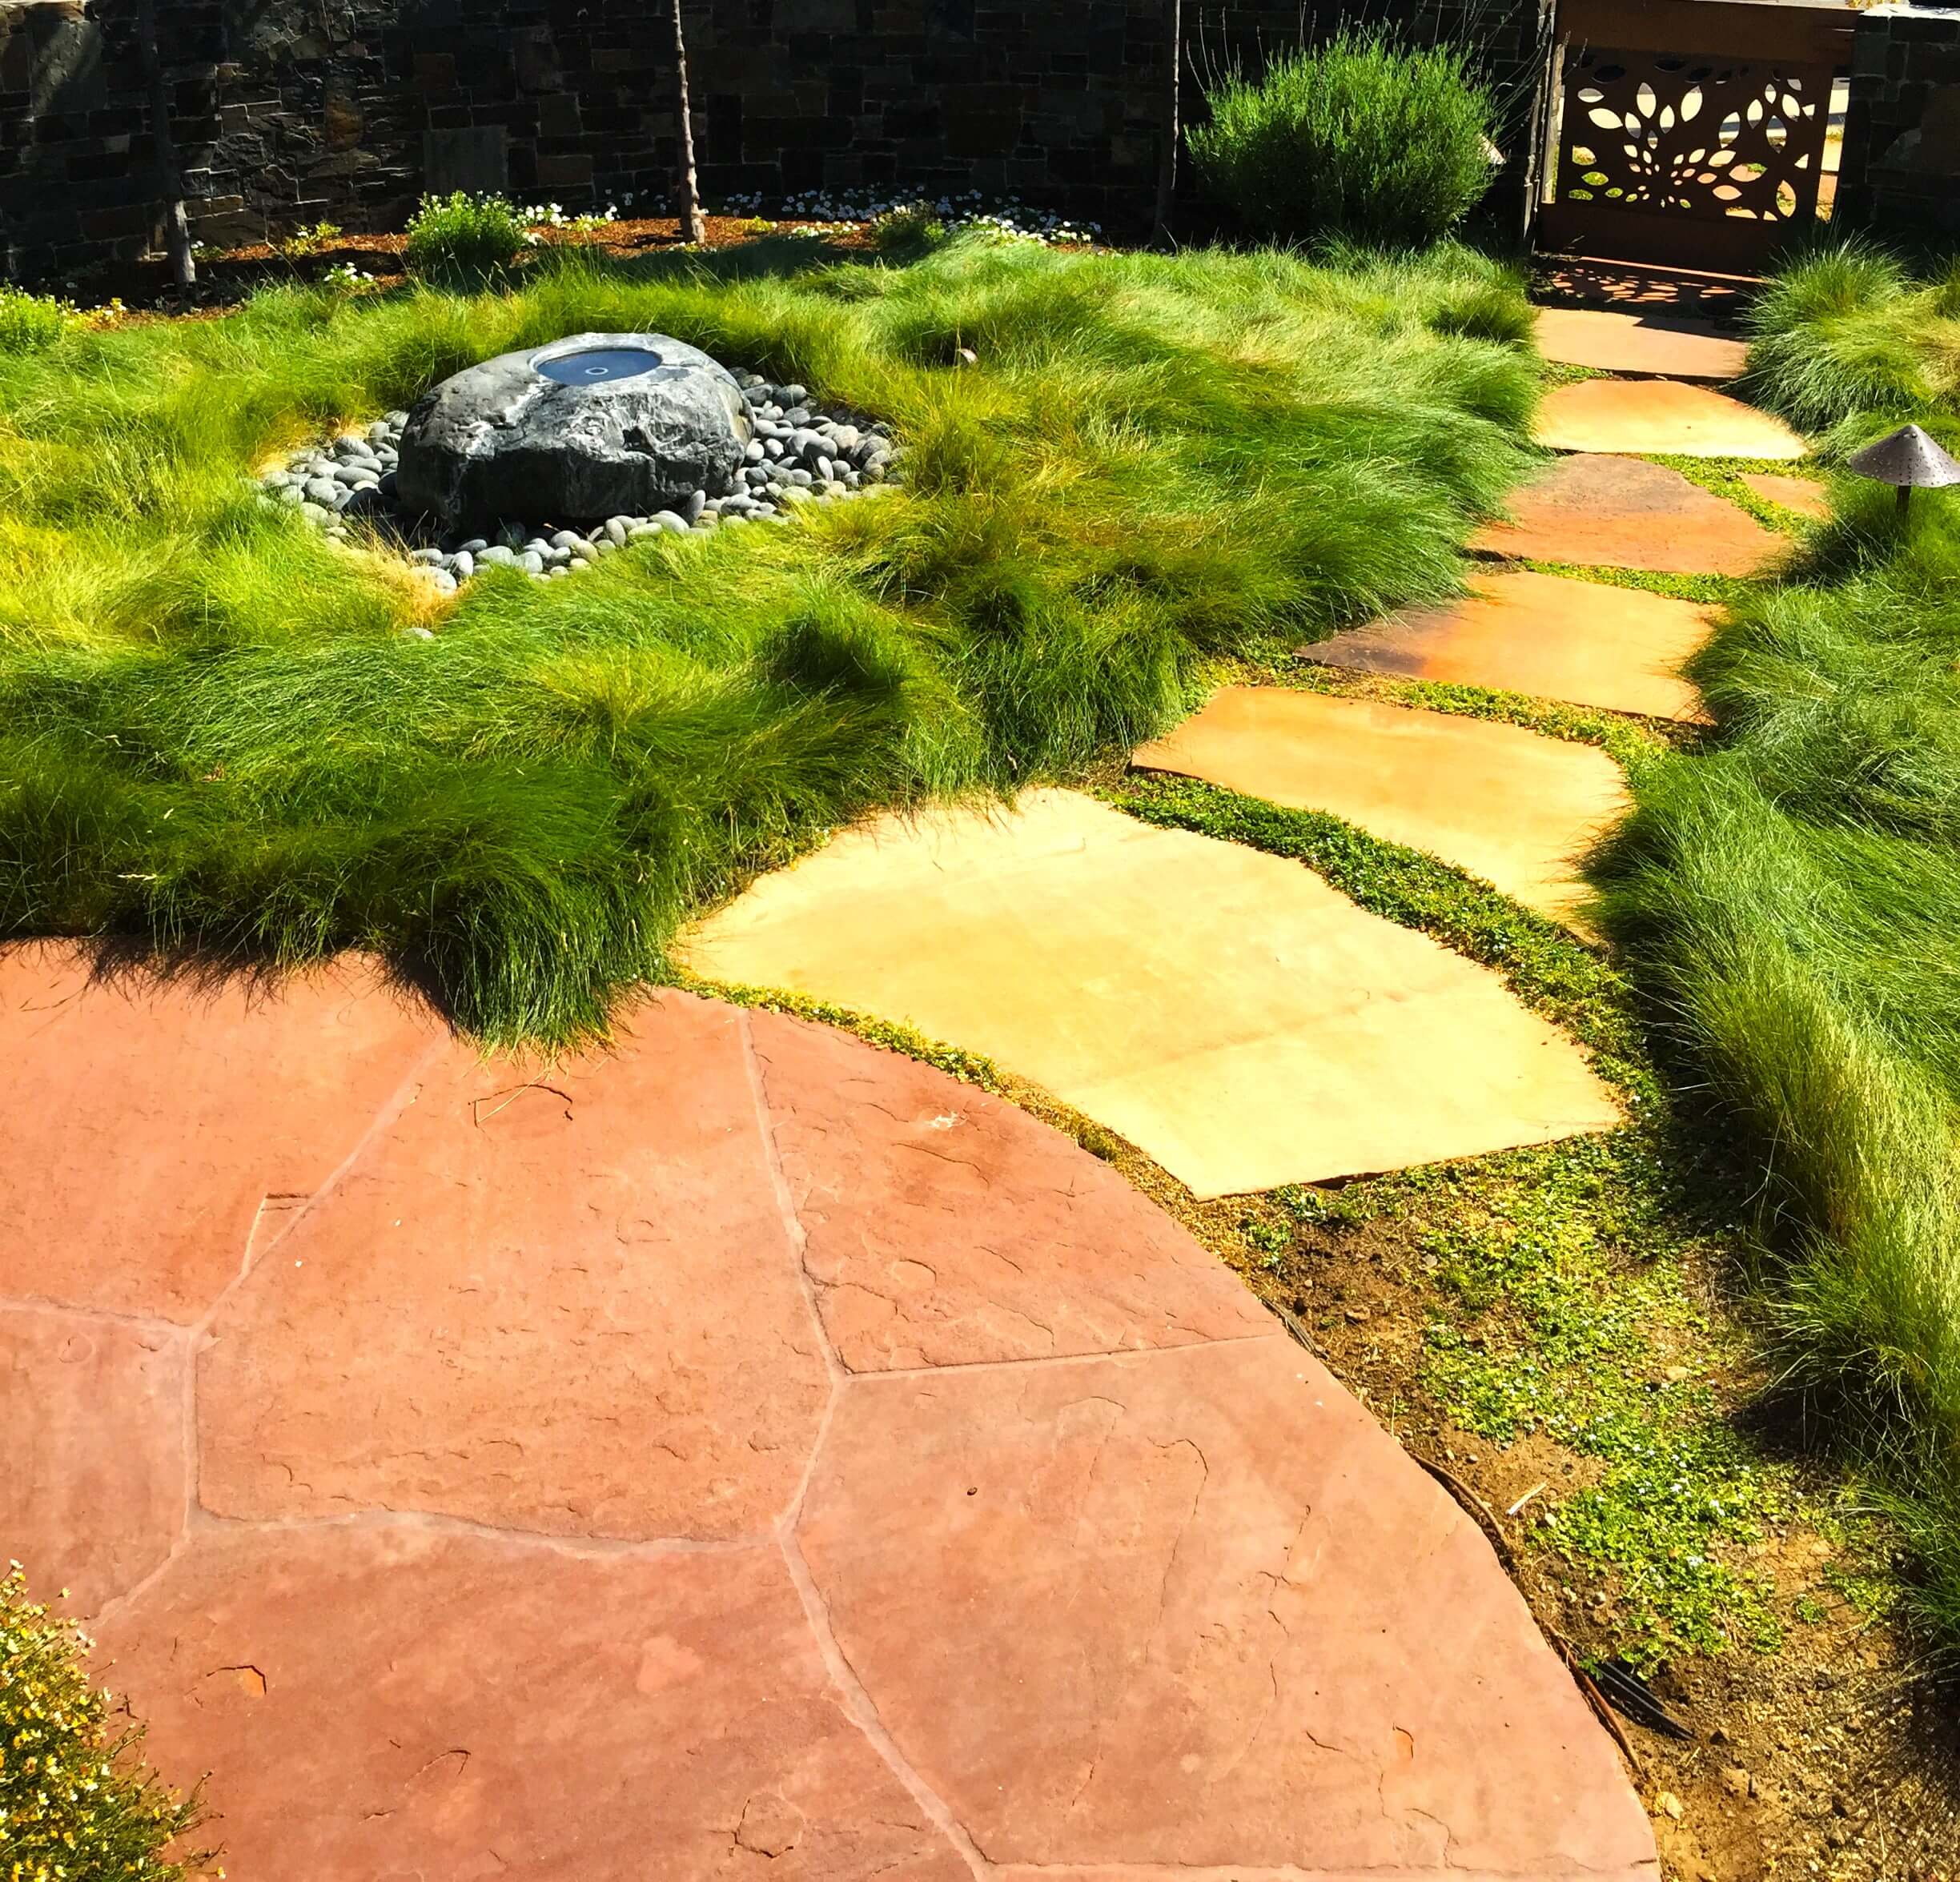 Paver stone walkway amidst tall ornamental grass